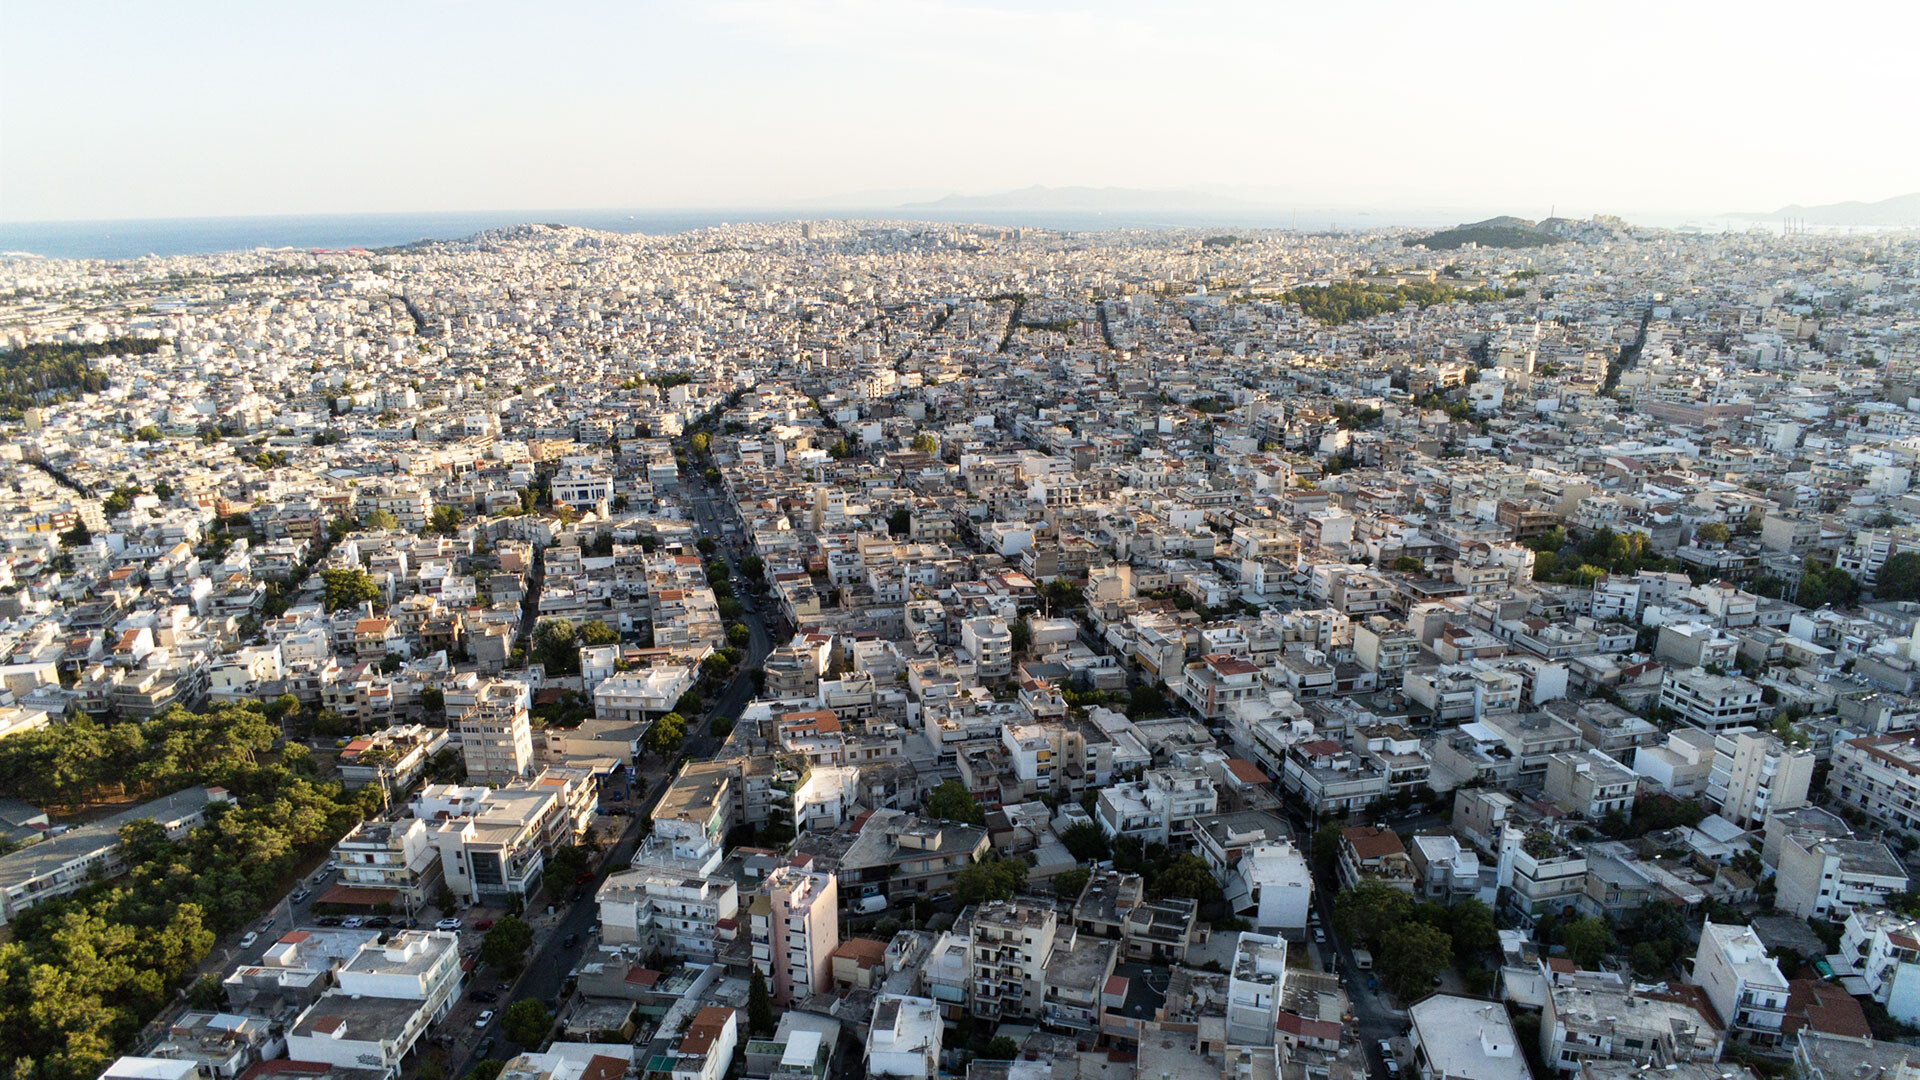 More information about "Επτά νέα Γενικά Πολεοδομικά Σχέδια για Αττική και Θεσσαλονίκη"